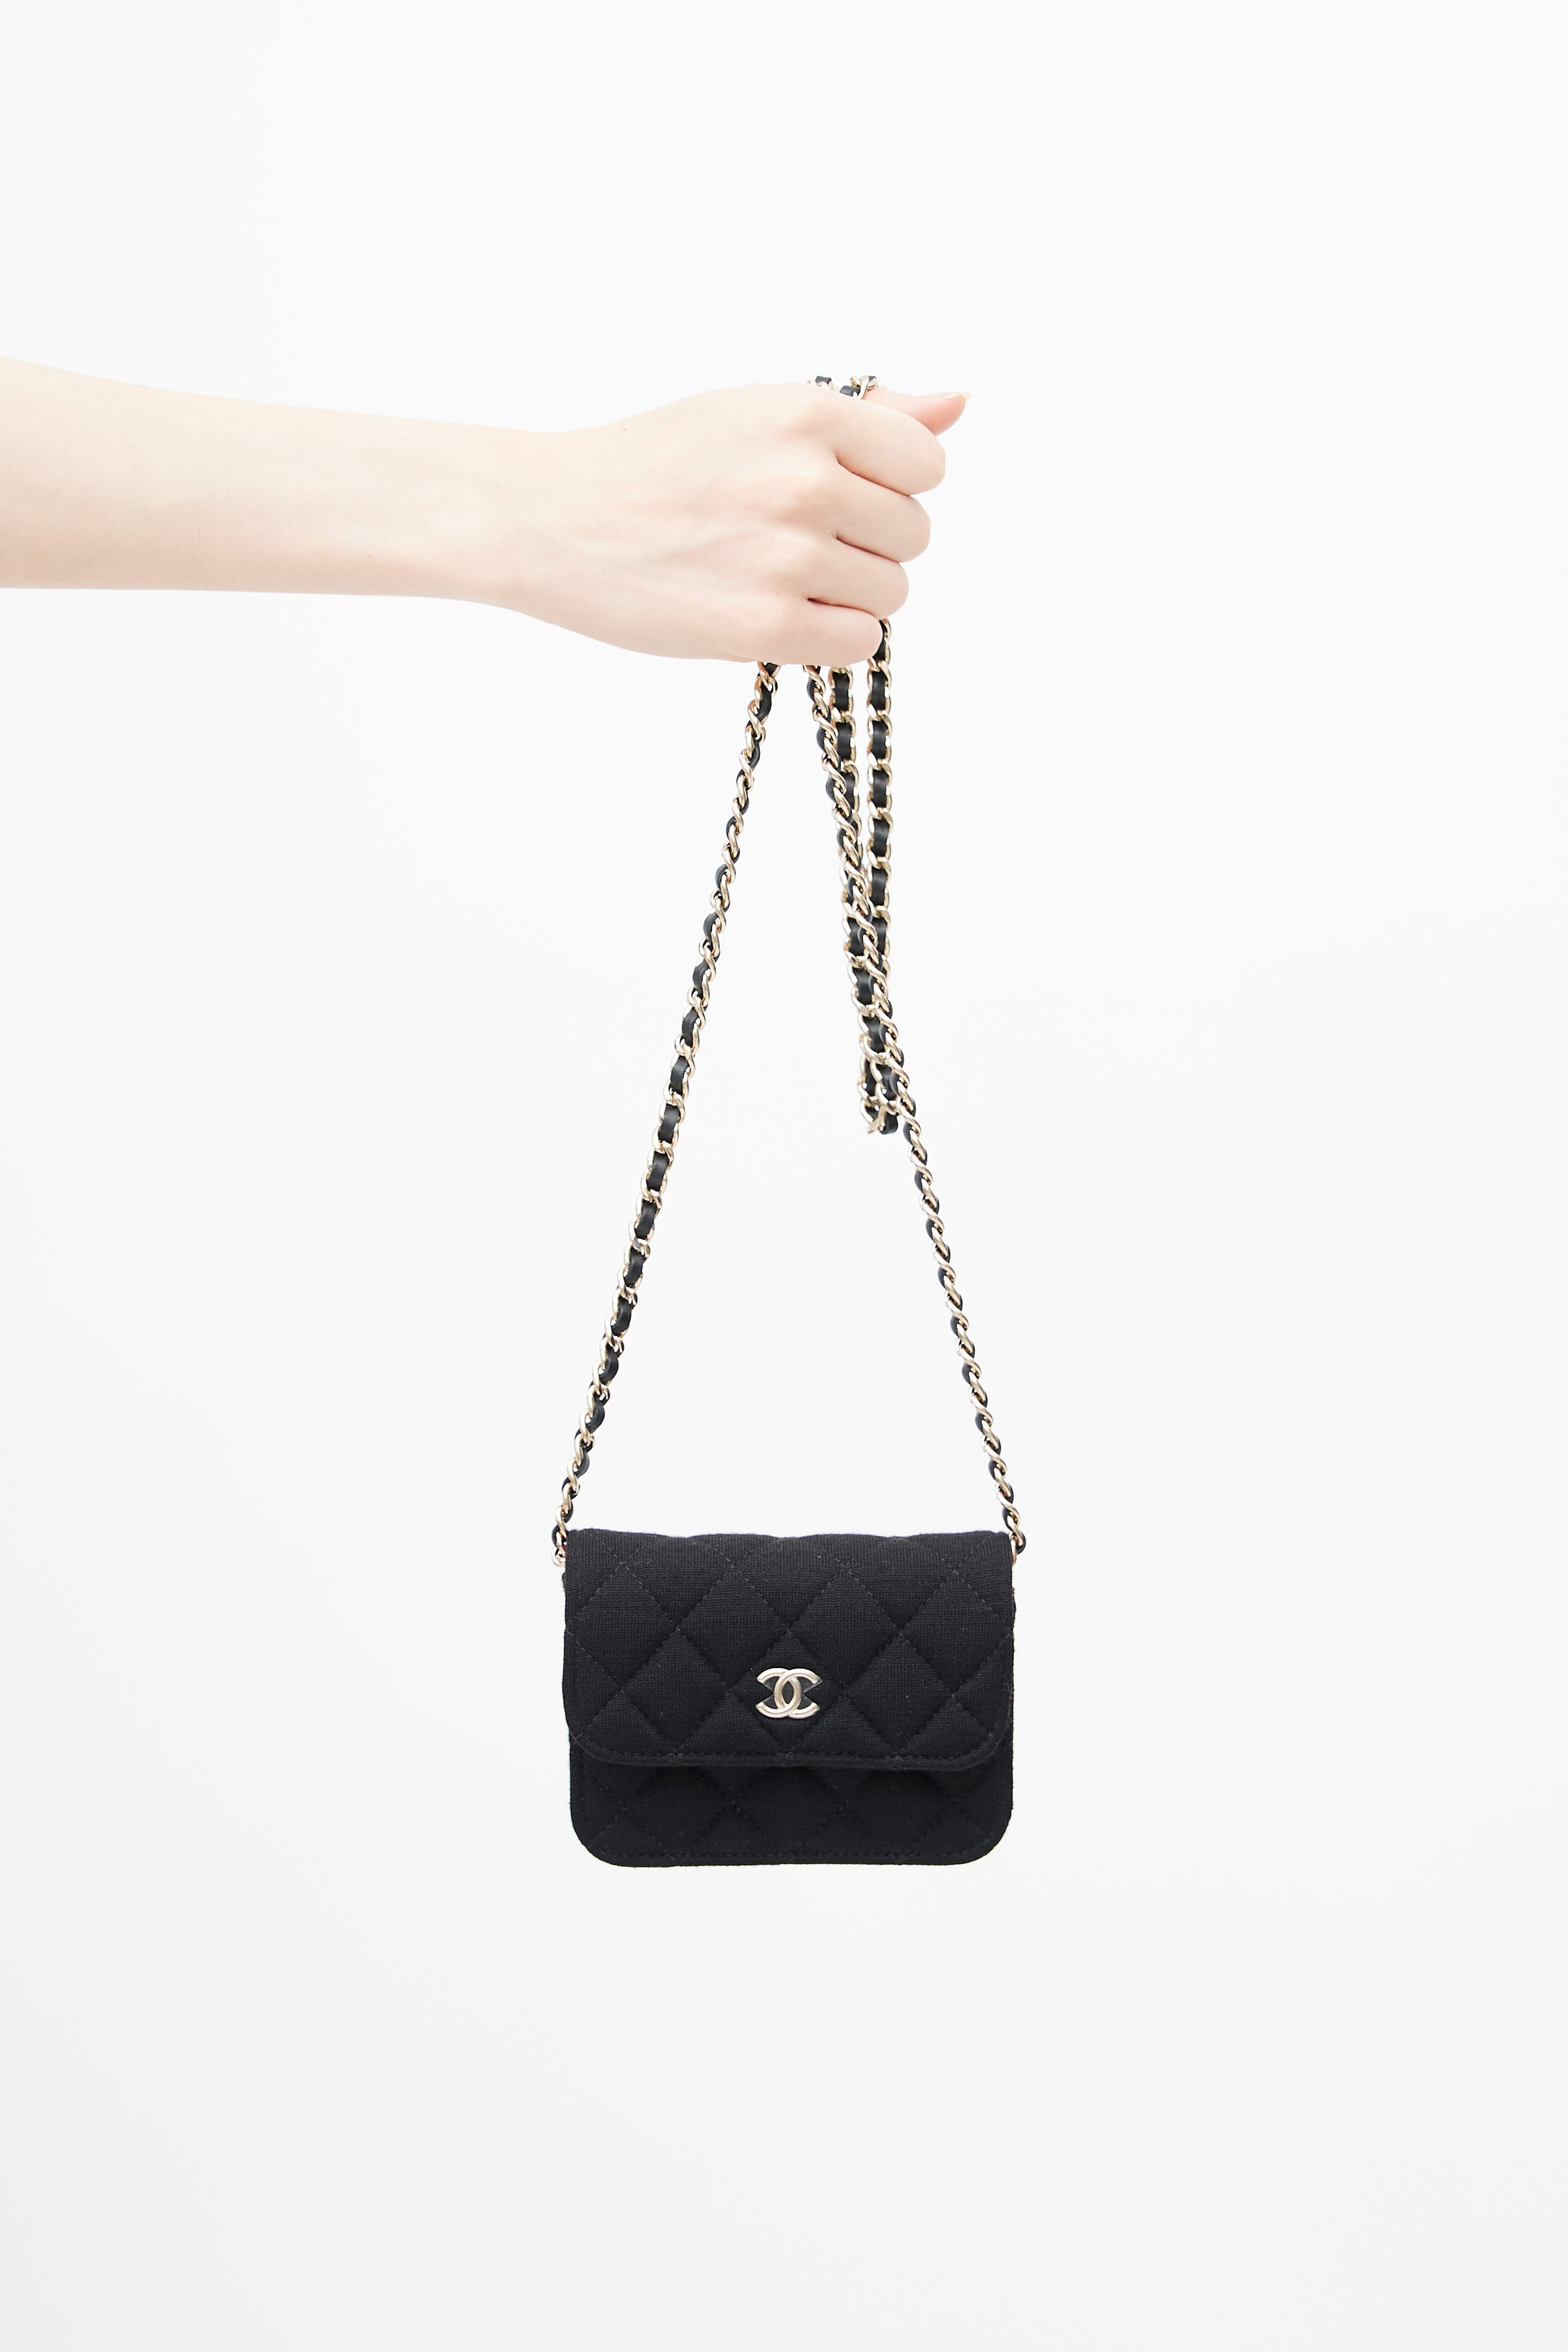 Chanel Quilted CC Crush Mini Flap Black Purse